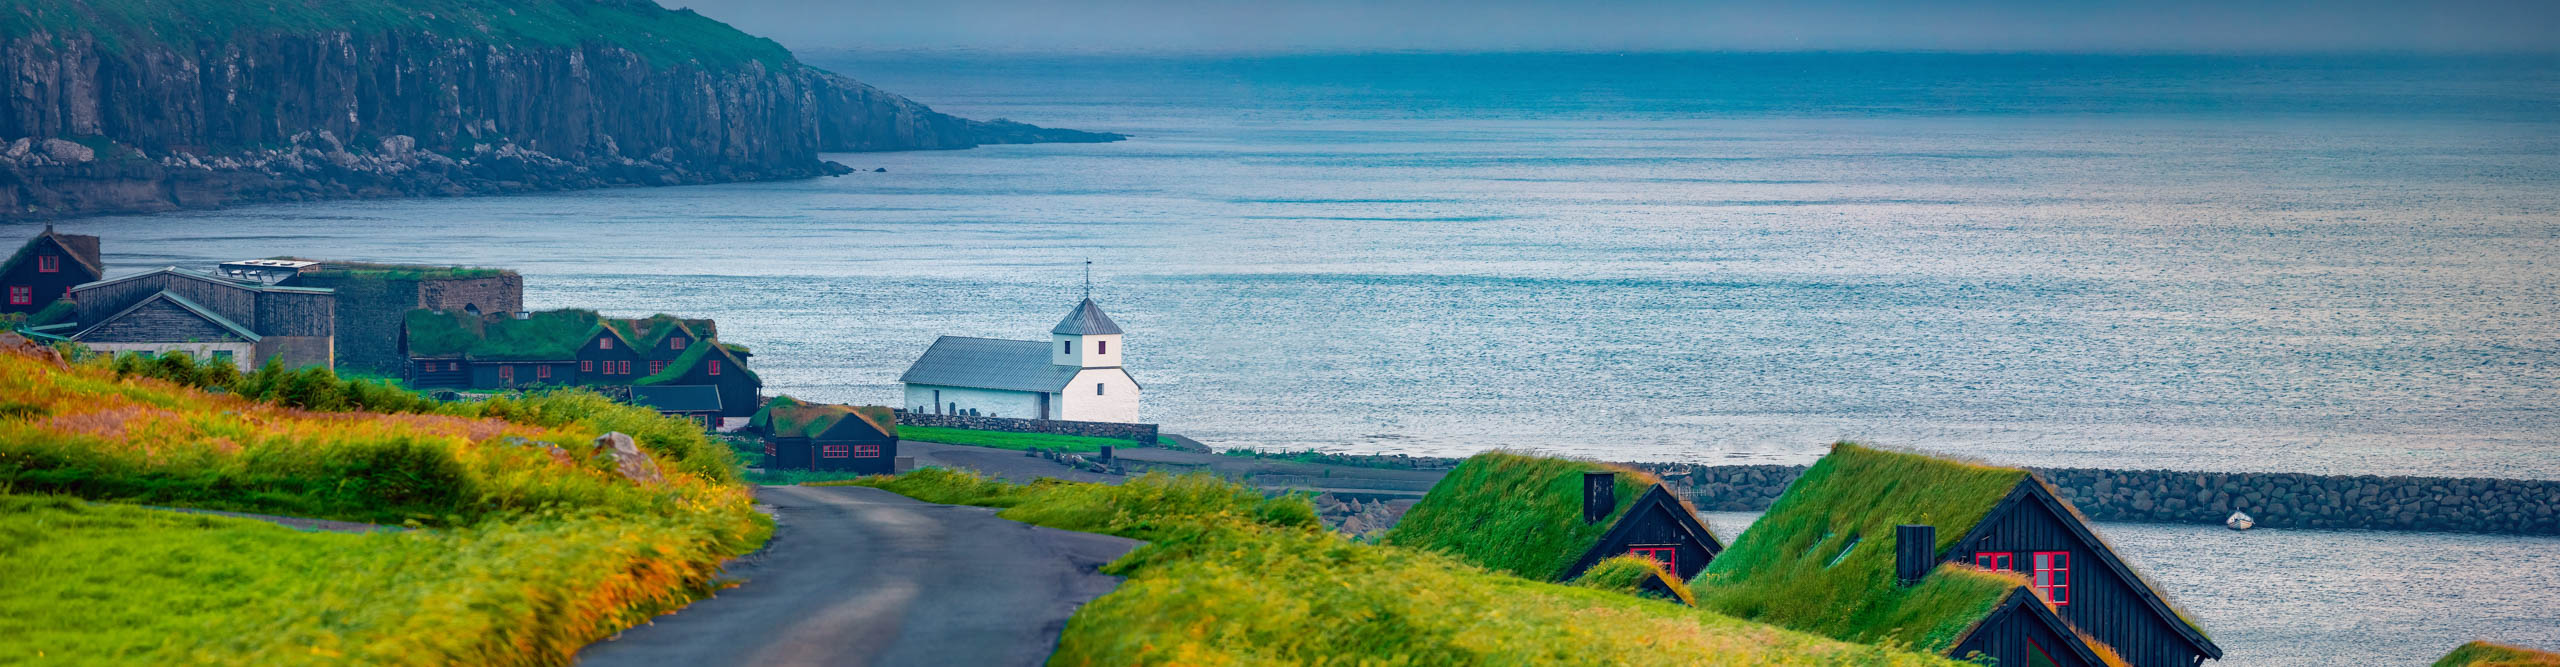 Coastal road going past a small church on the coast of the Faroe Islands 